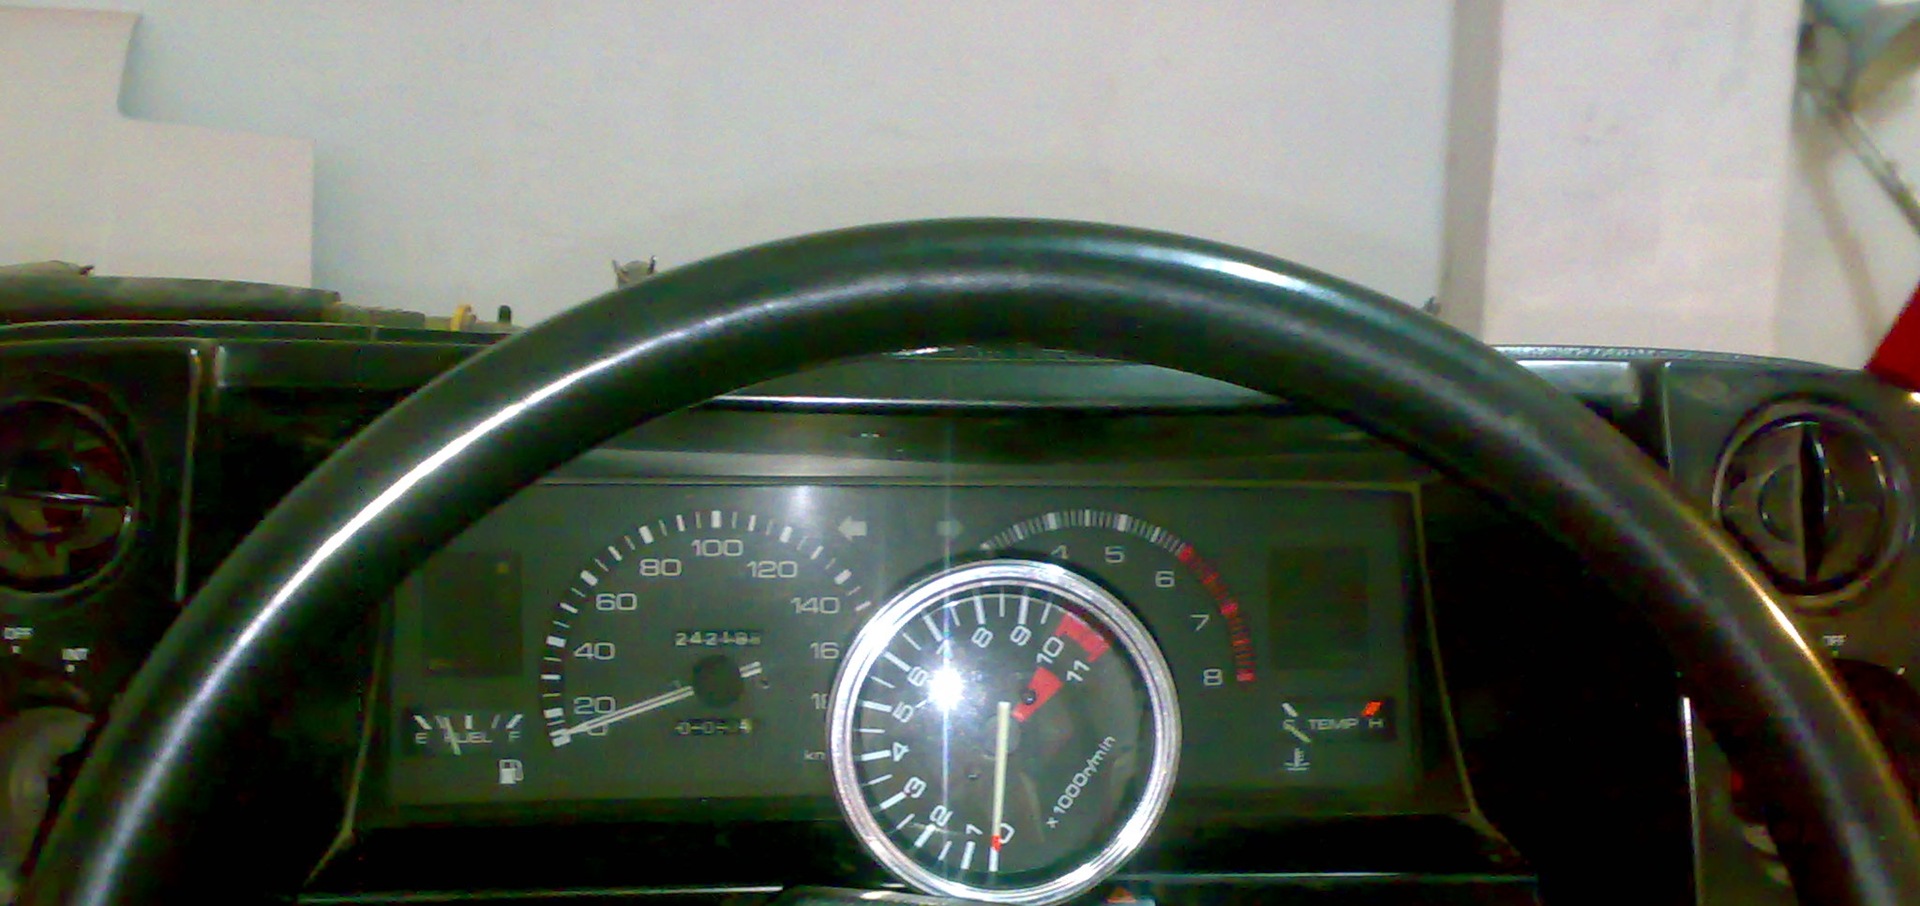  18 2010 Toyota Sprinter Trueno 16 1988 